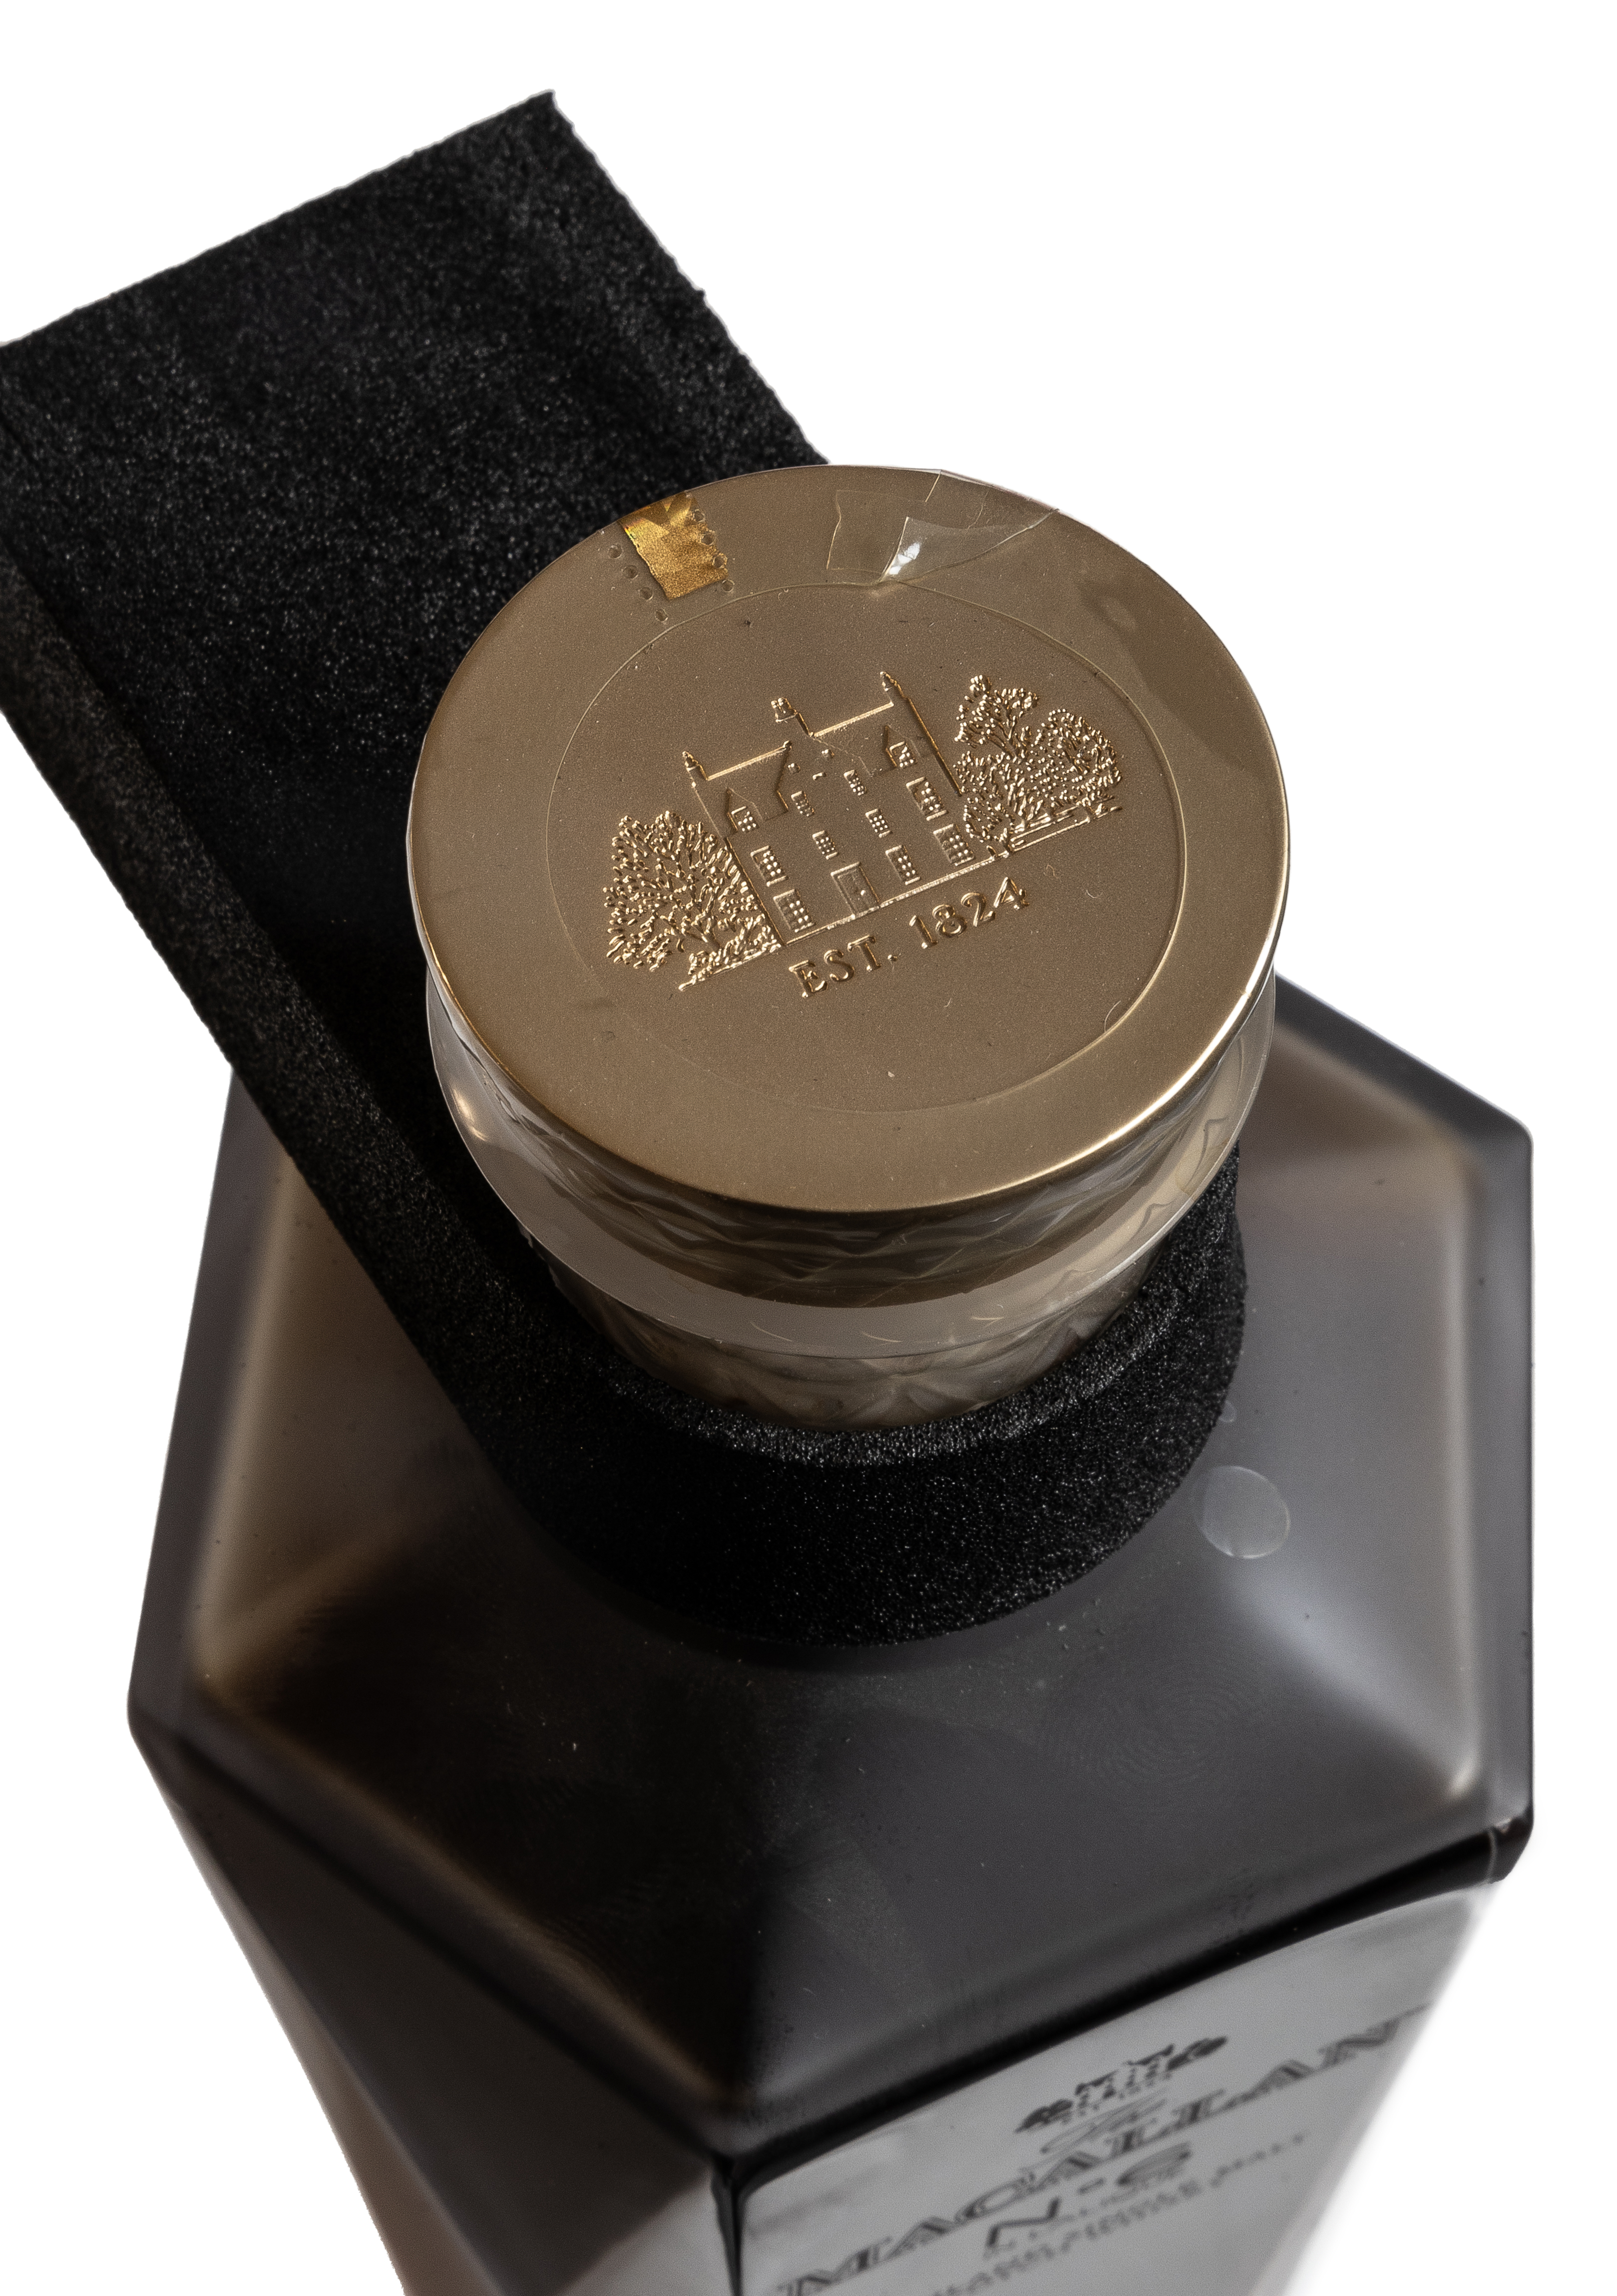 The Macallan No.6 in Lalique Highland Single Malt Scotch Whisky 43% vol. 0,7L